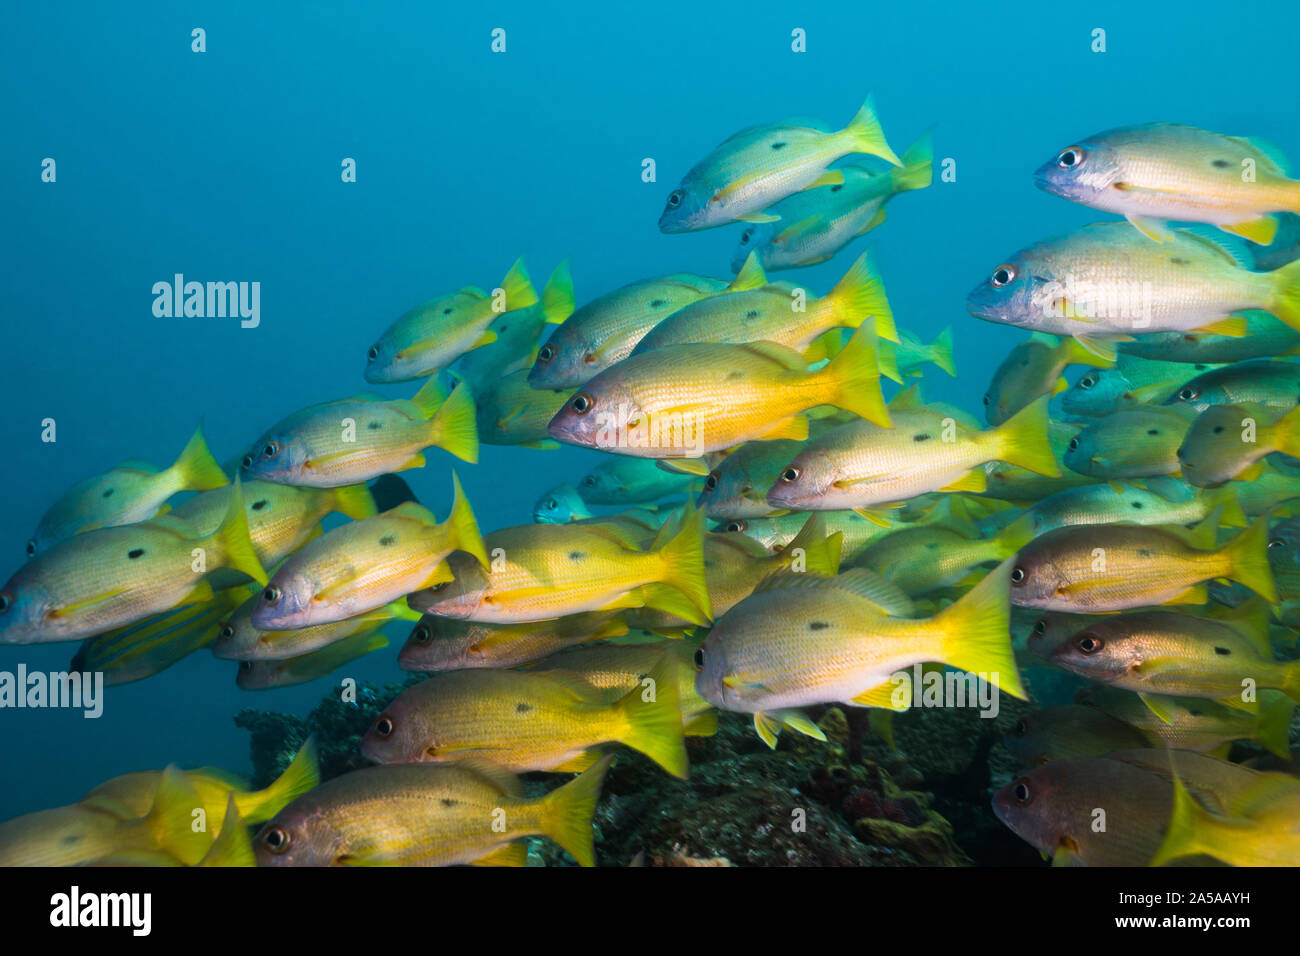 A school of Dory Snapper fish or Longspot snapper (Lutjanus fulviflamma). Bright yellow body with black spot. Stock Photo